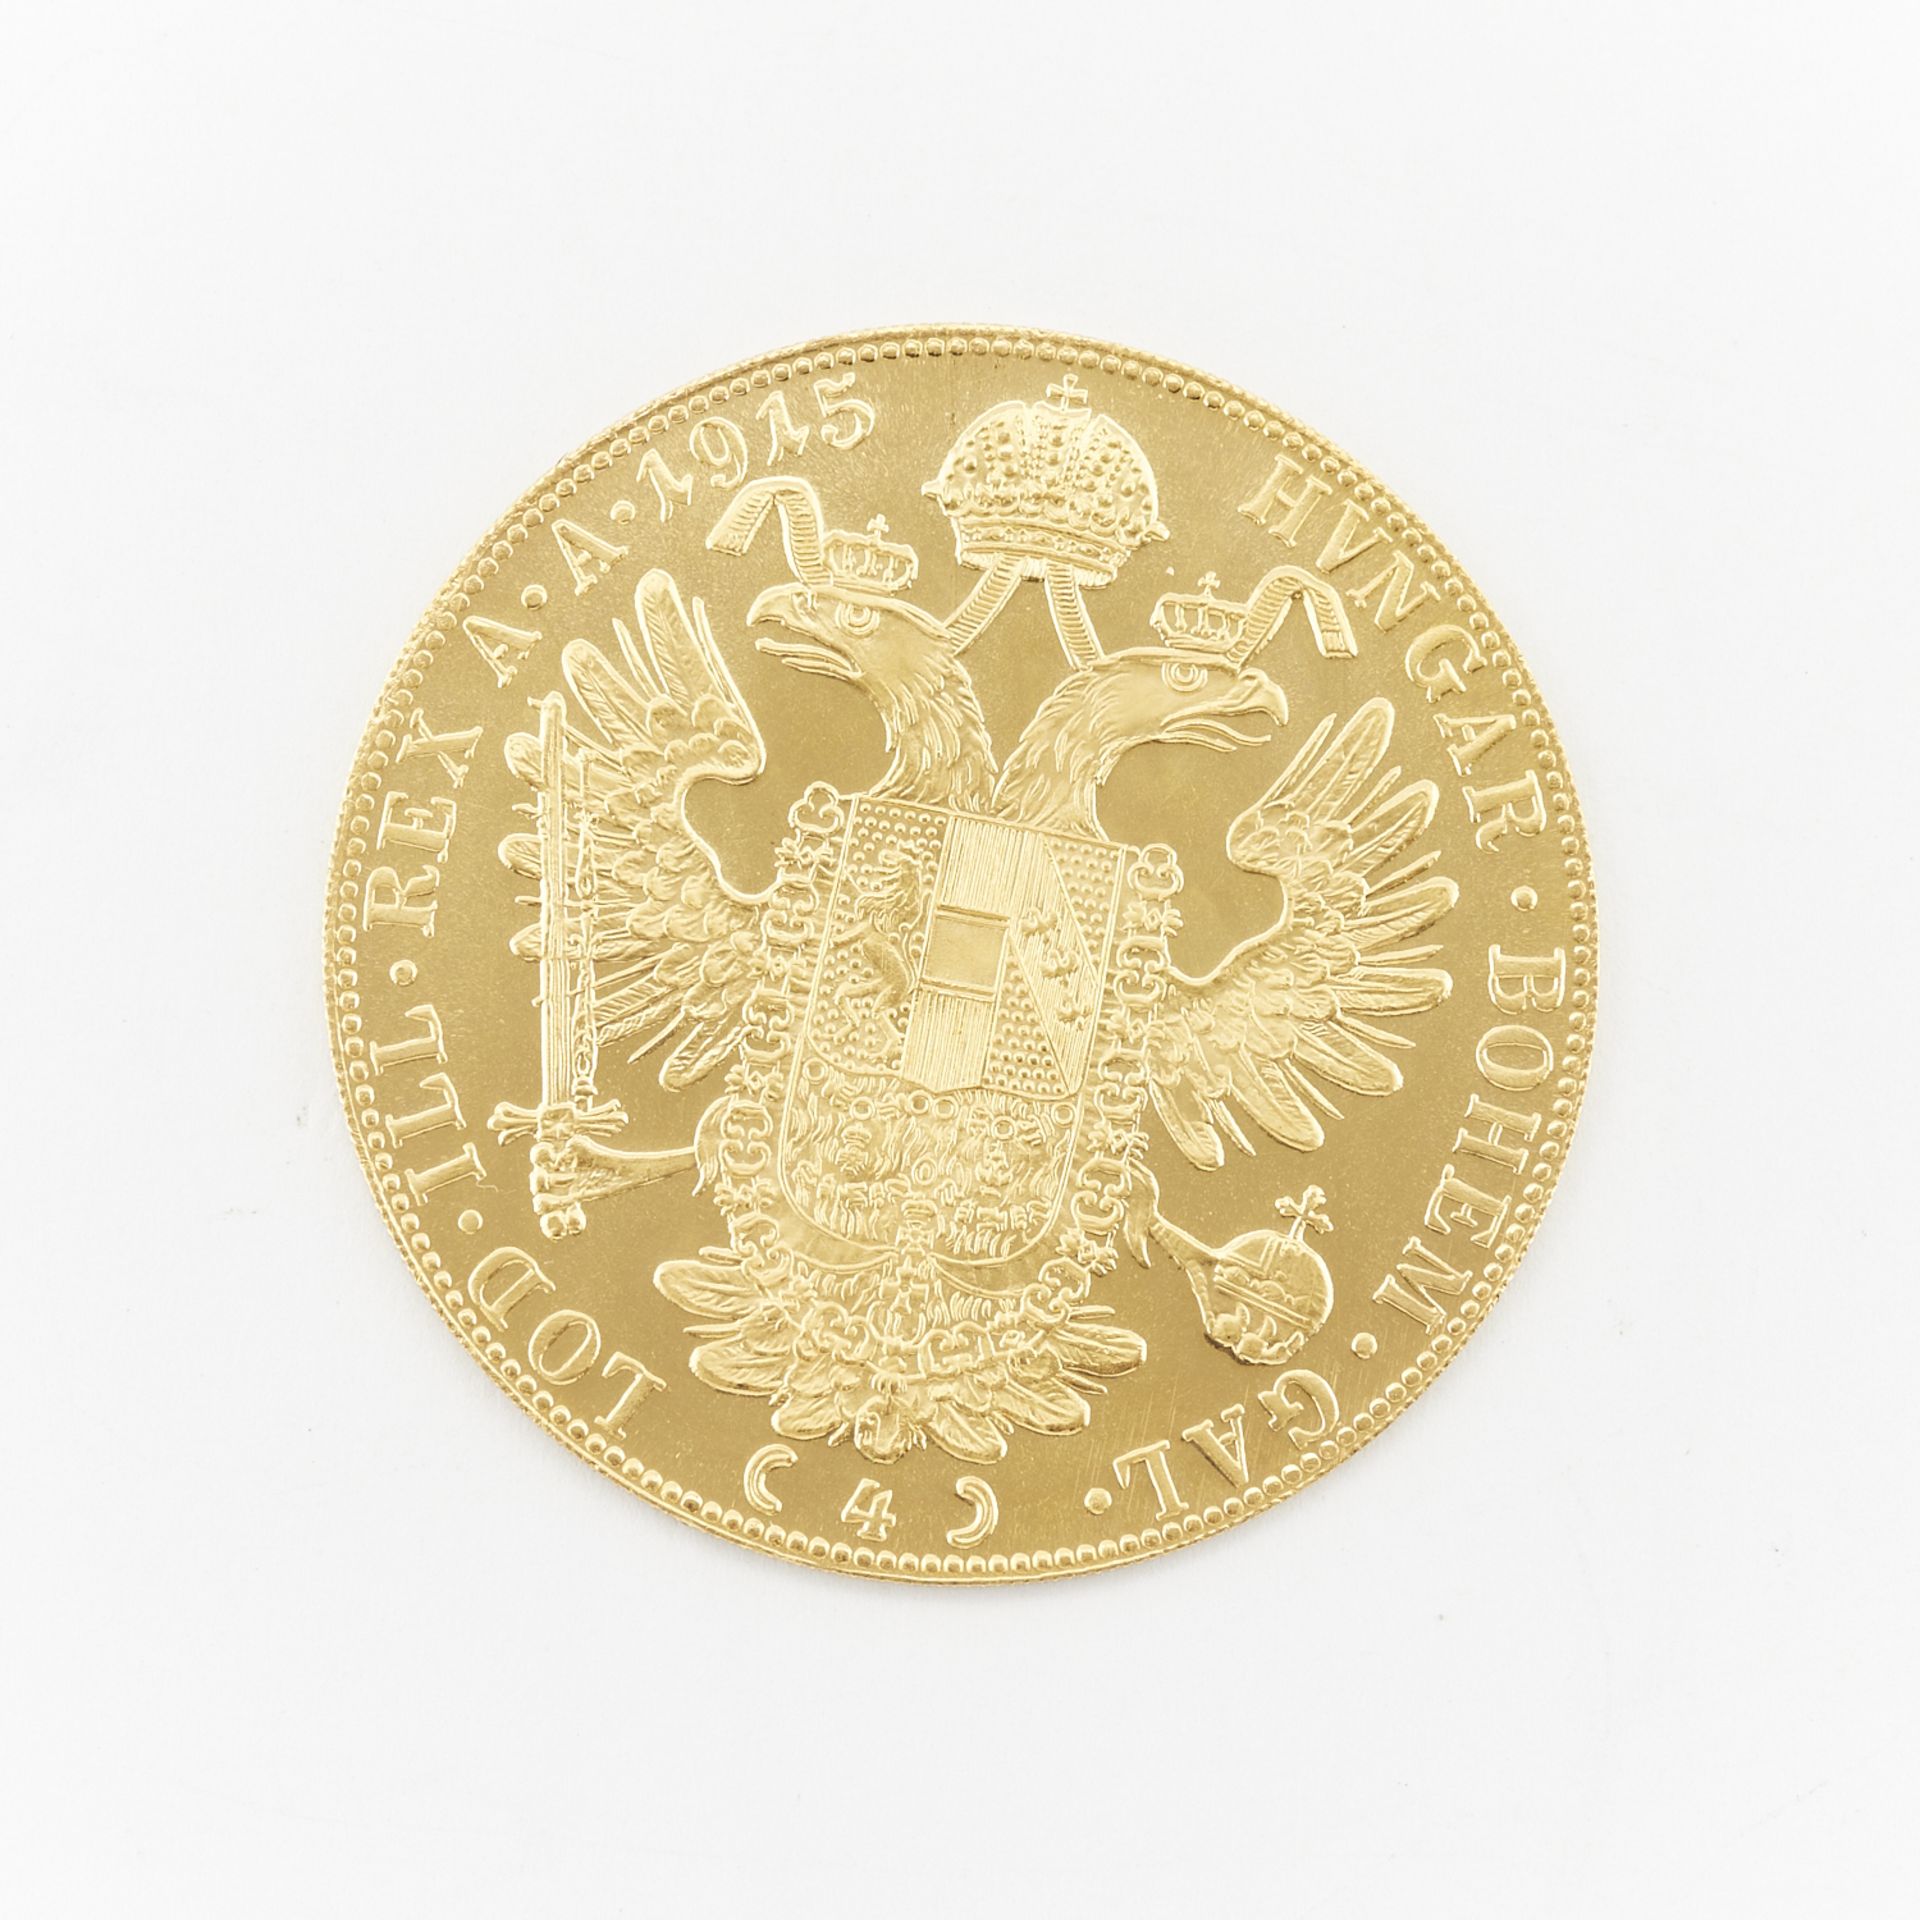 1915 4 Ducat Gold Austria Coin - Image 2 of 2